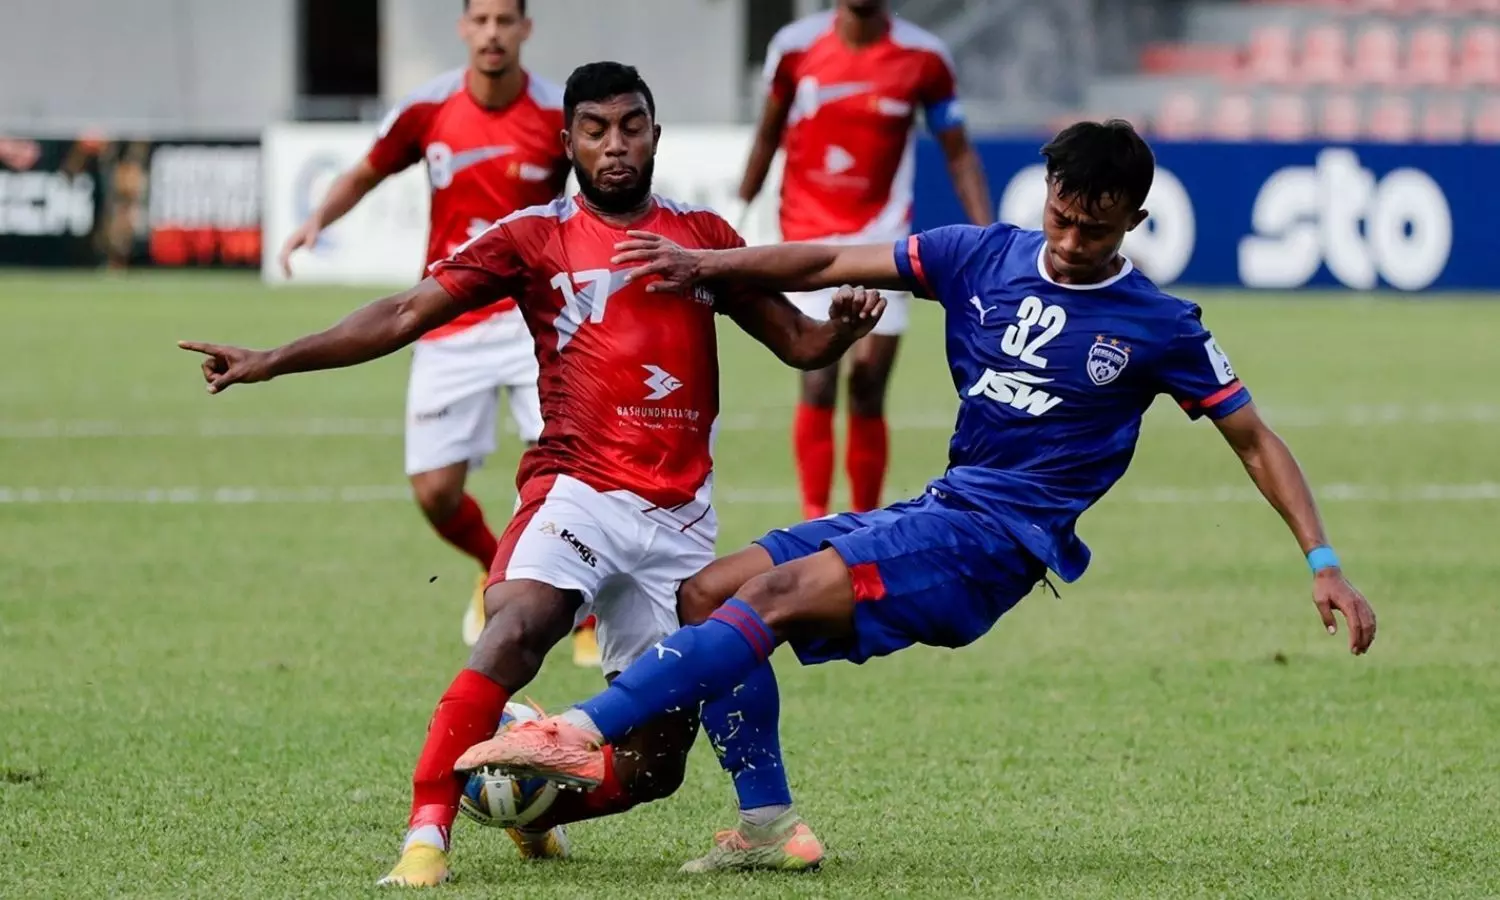 AFC Cup 2021 Bengaluru FC vs Maziya Live Blog, Lineups, Scores and Updates